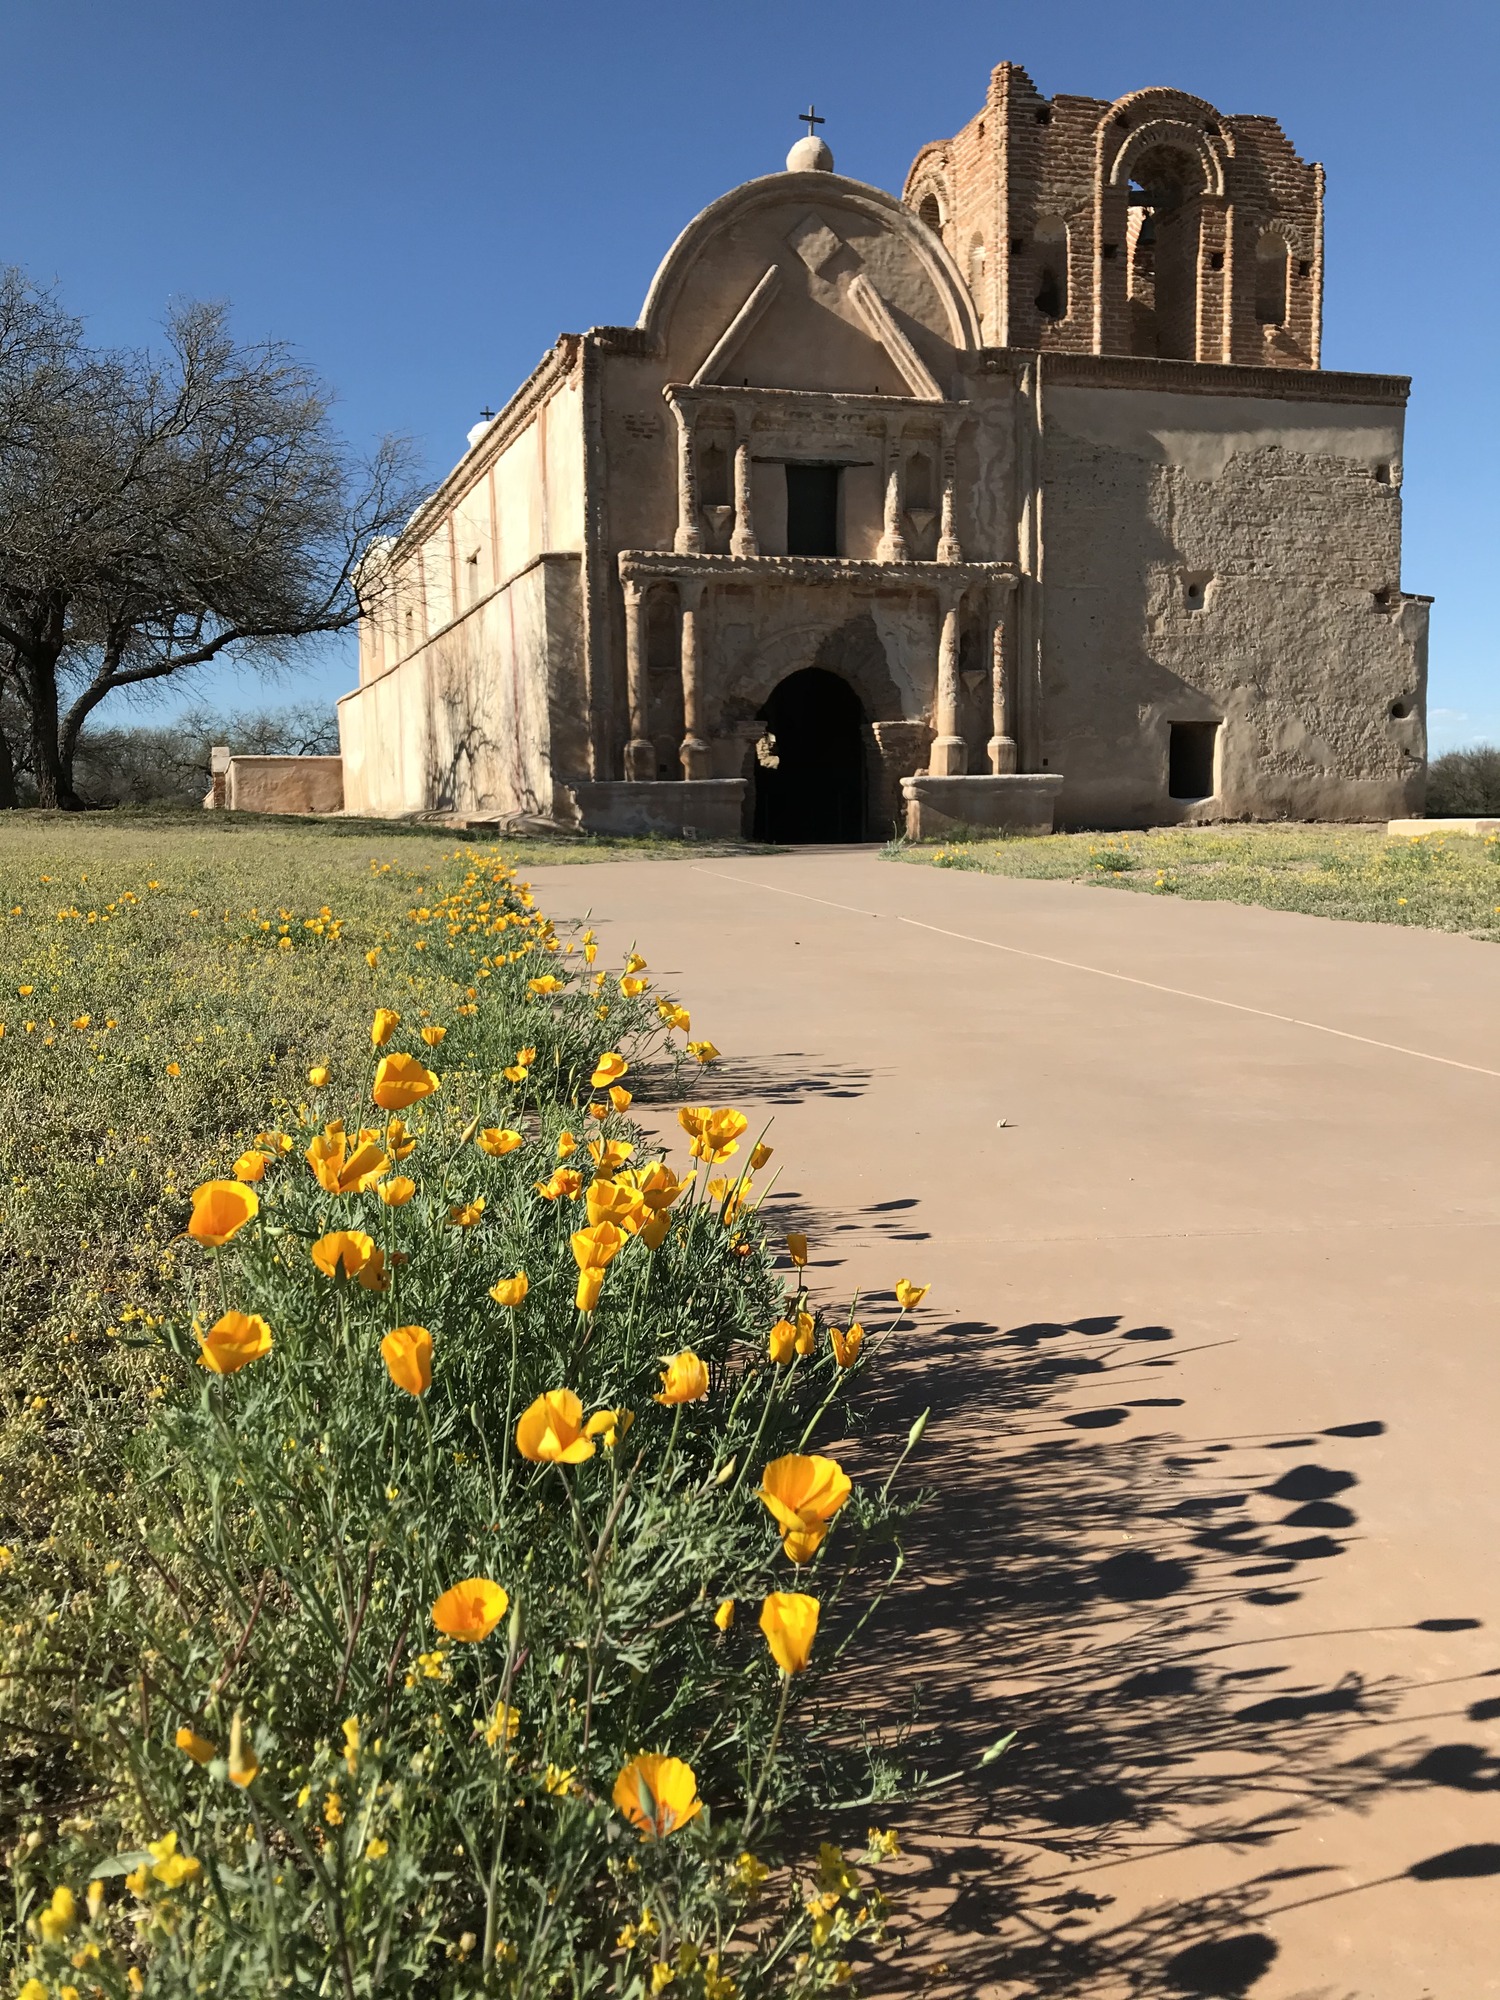 Tumacacori mission church with poppies next to sidewalk